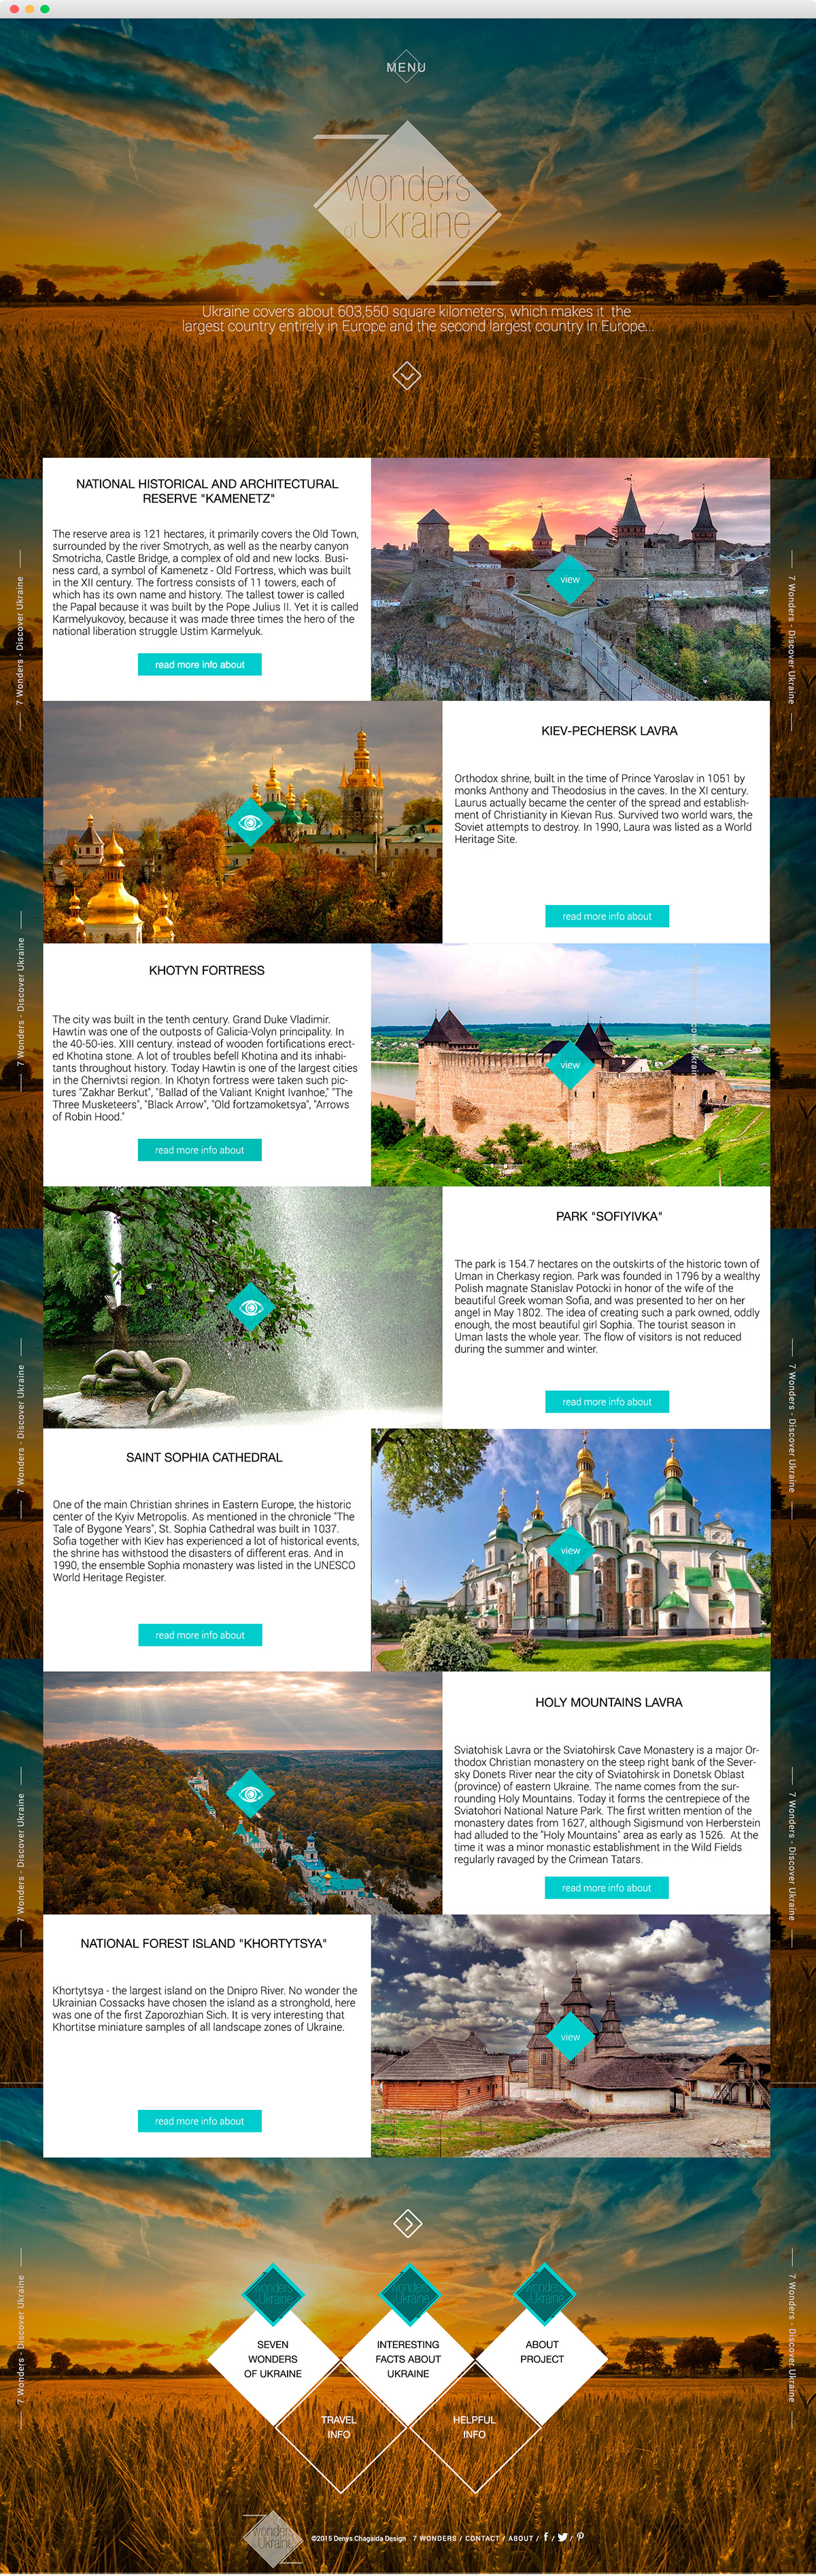 Web design clean doscover ukraine traveling country Europe wonder 7wonders land